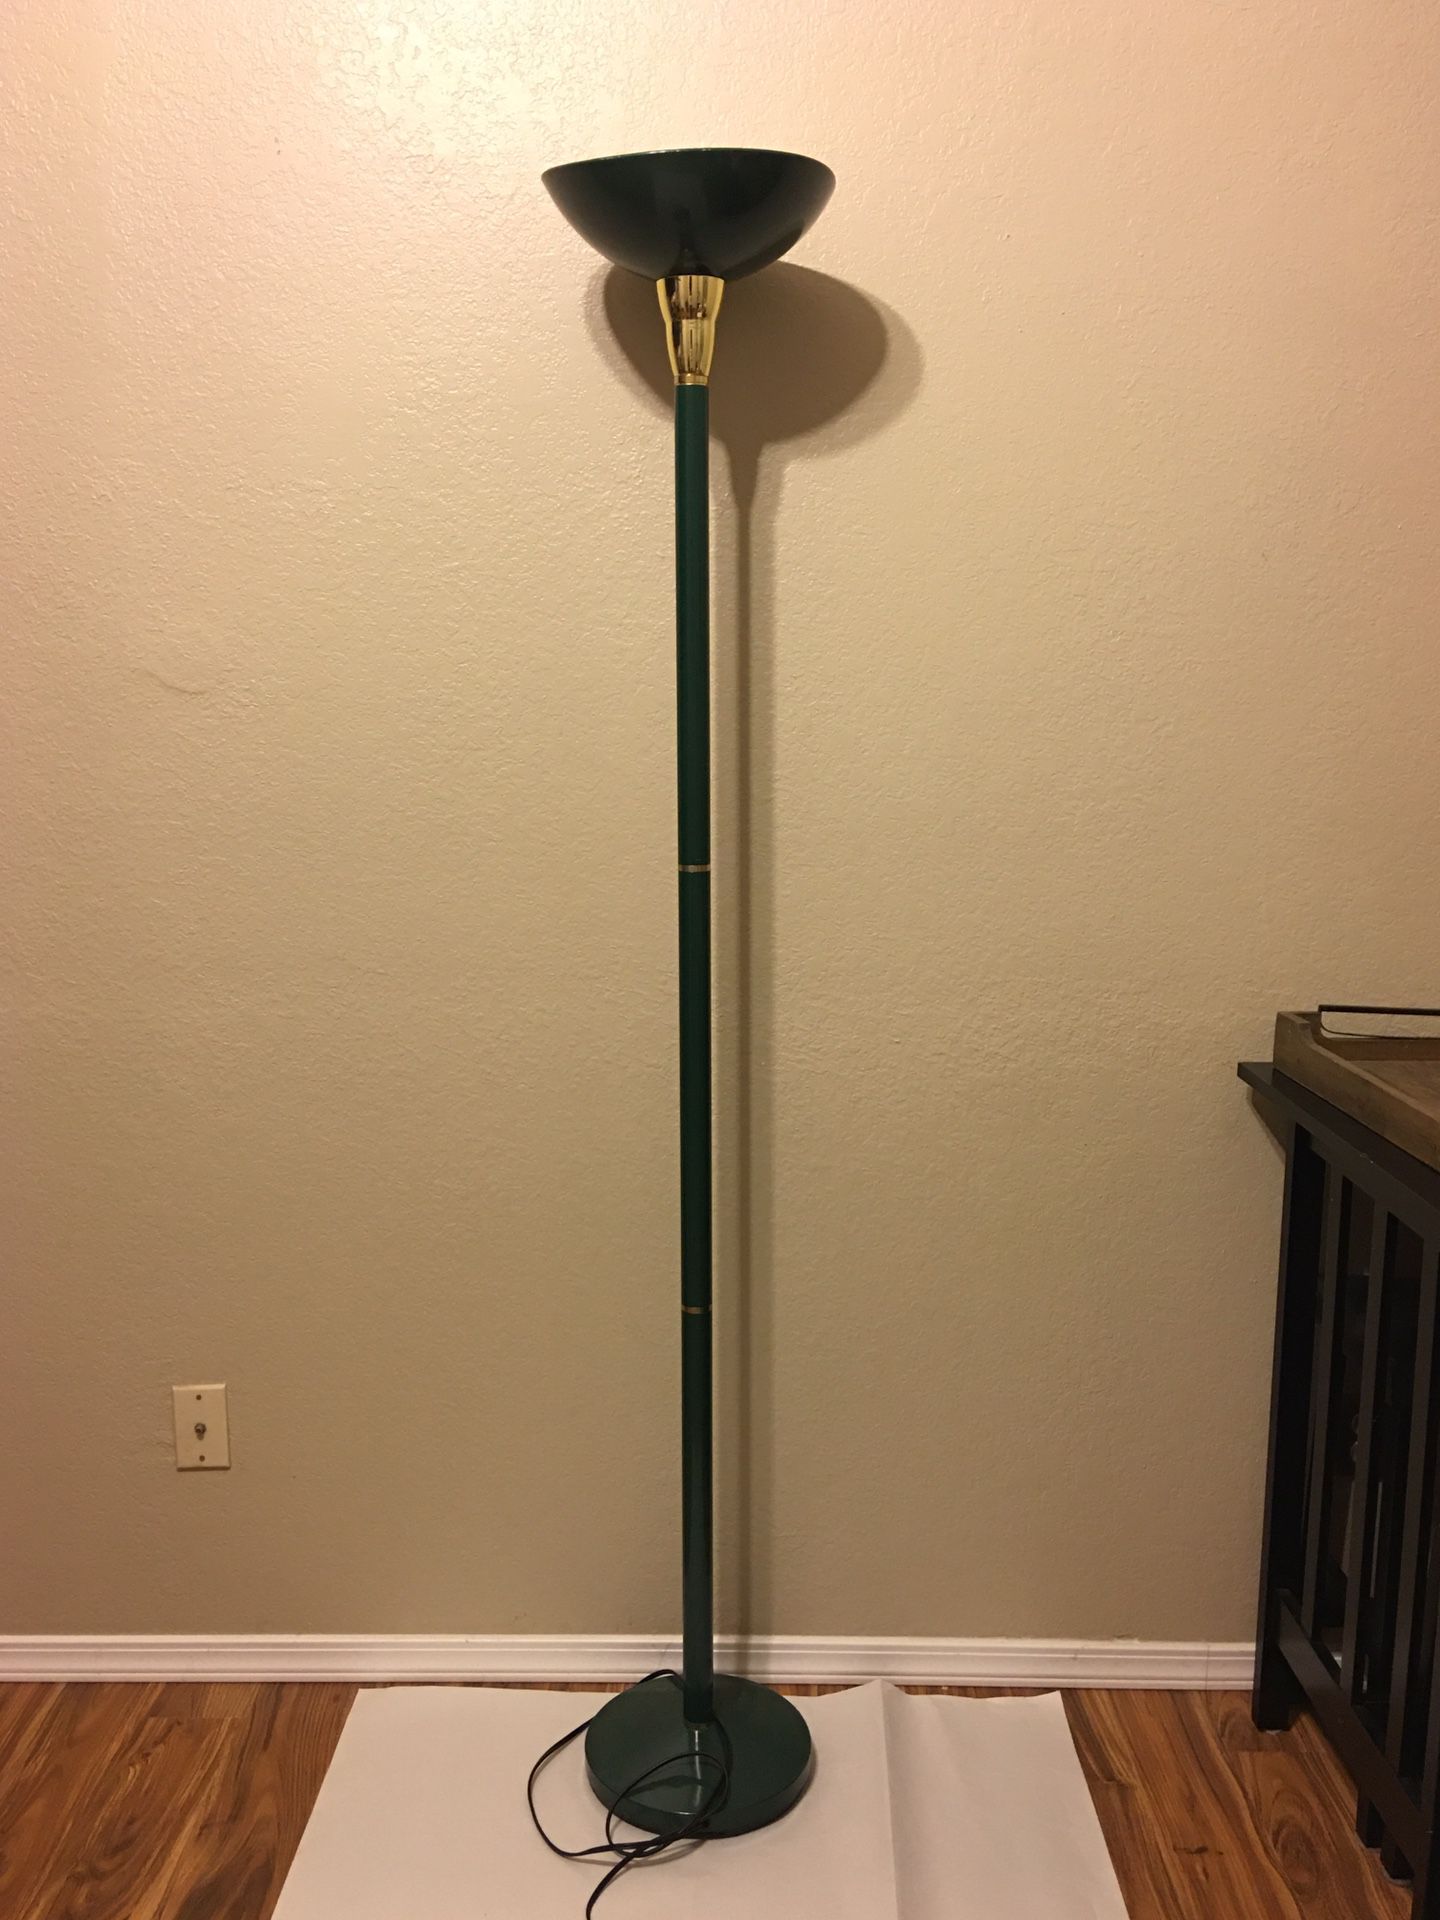 Green standing lamp